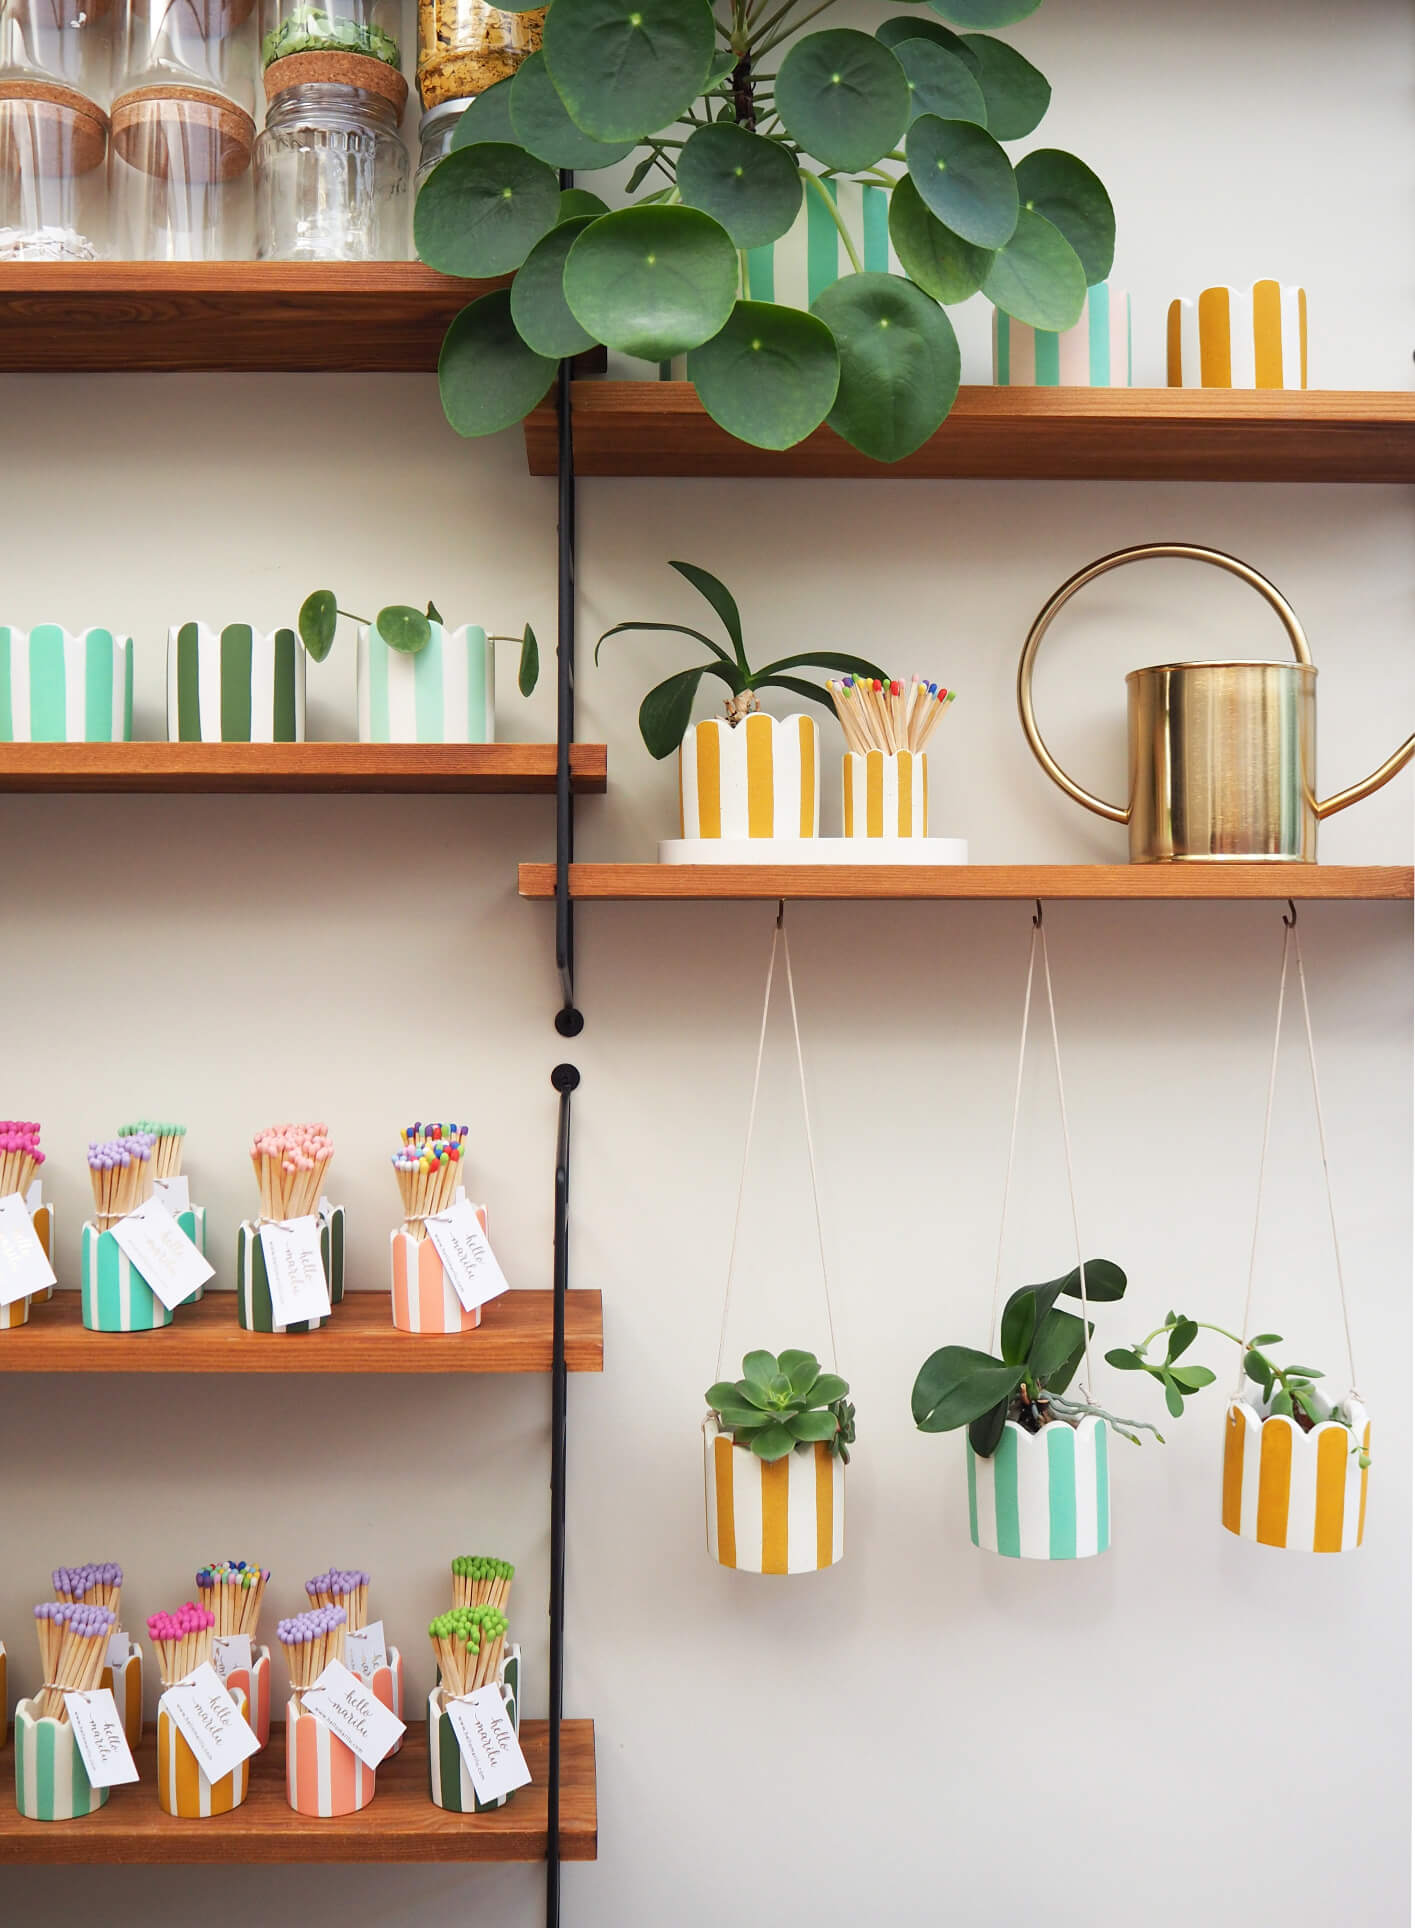 Stripey match pots and plant pots inside independent maker Hello Marilu's home studio